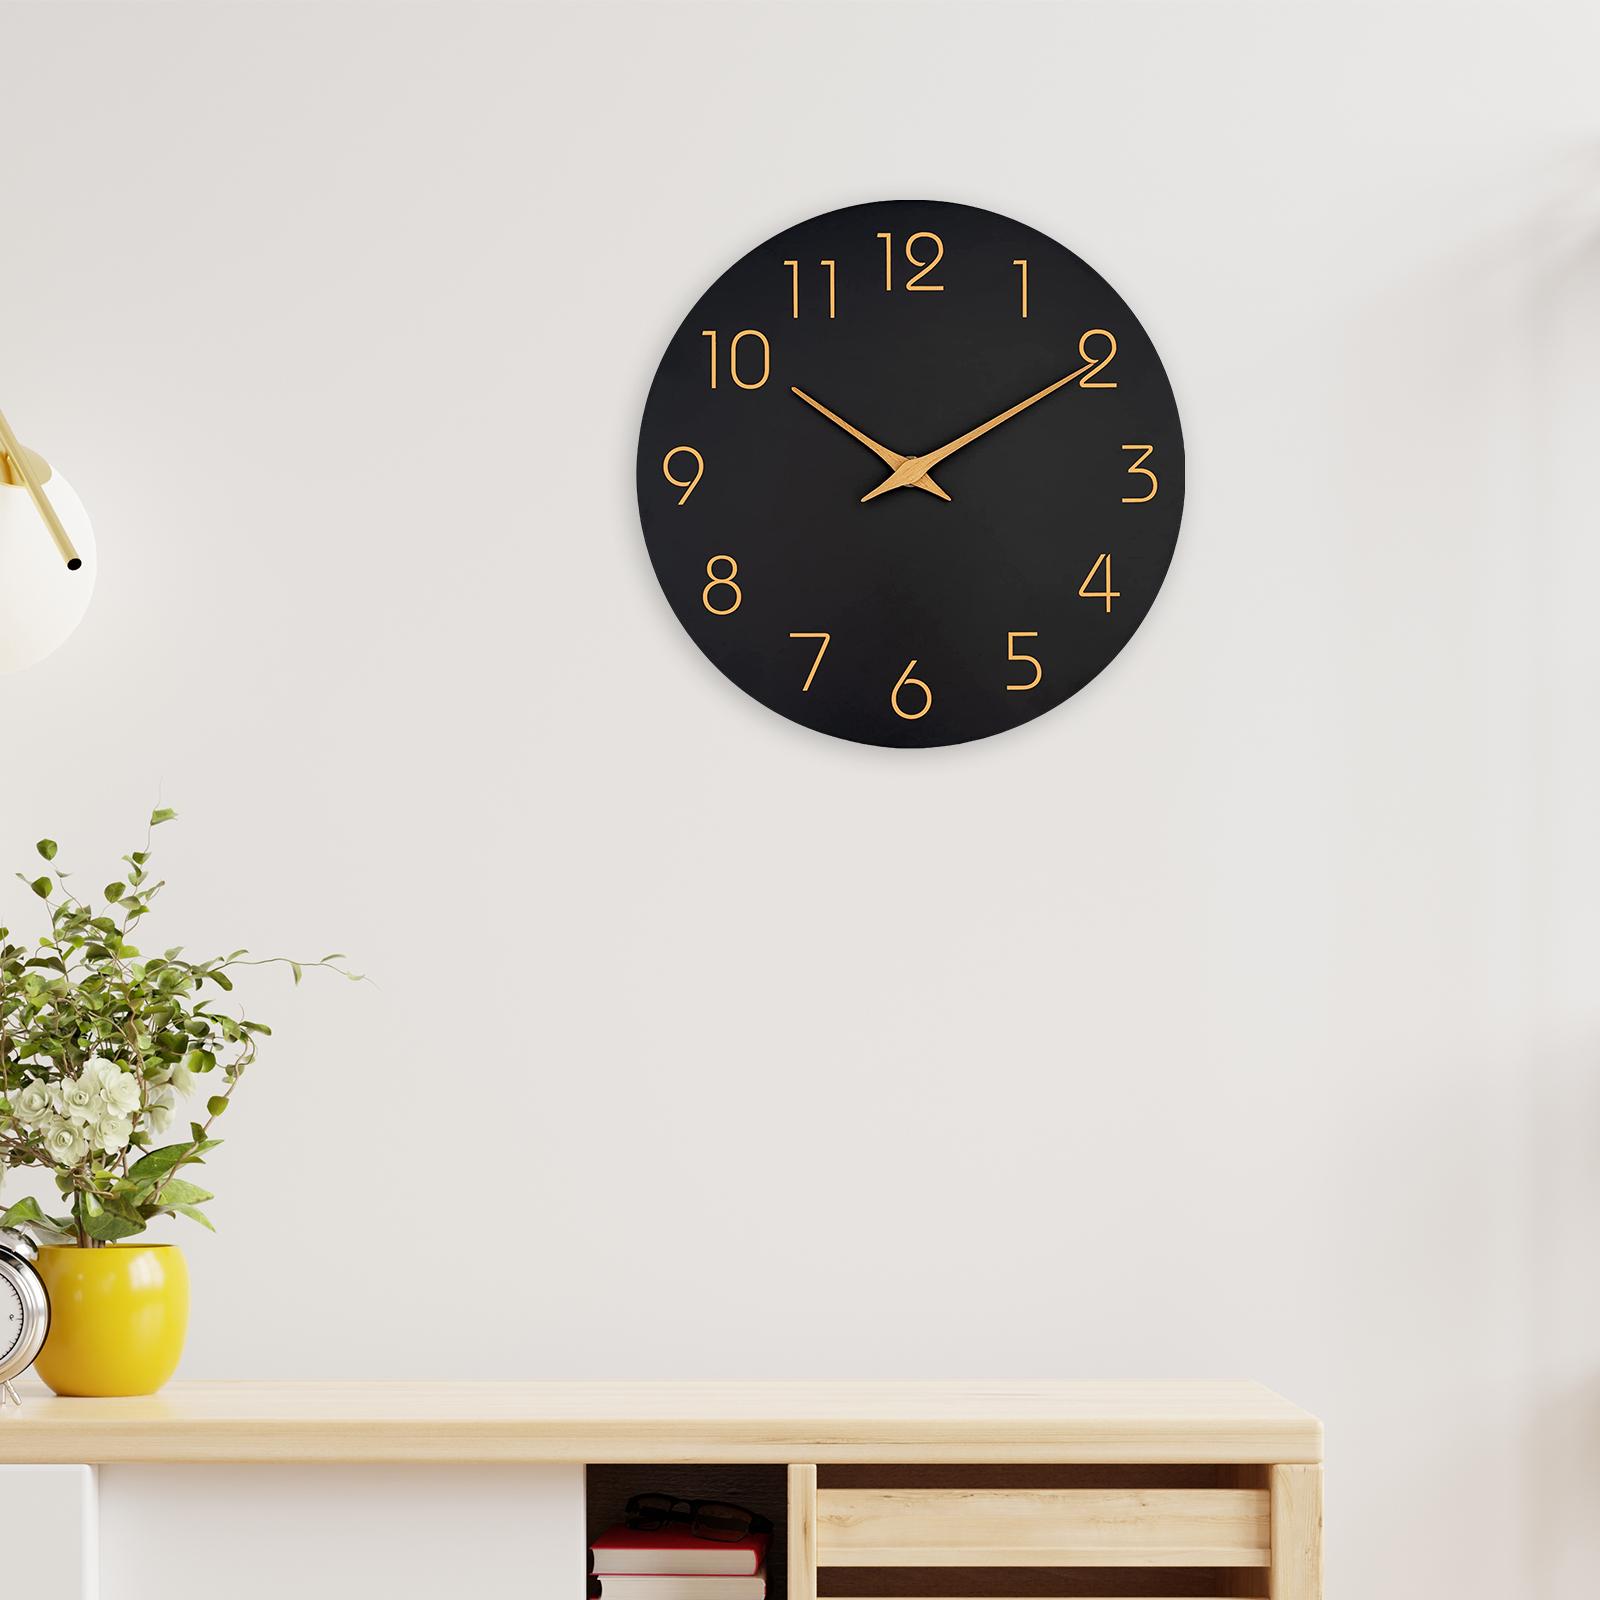 Decorative Wall Clock No Ticking Simple for Kitchen Island Dorm Hallway